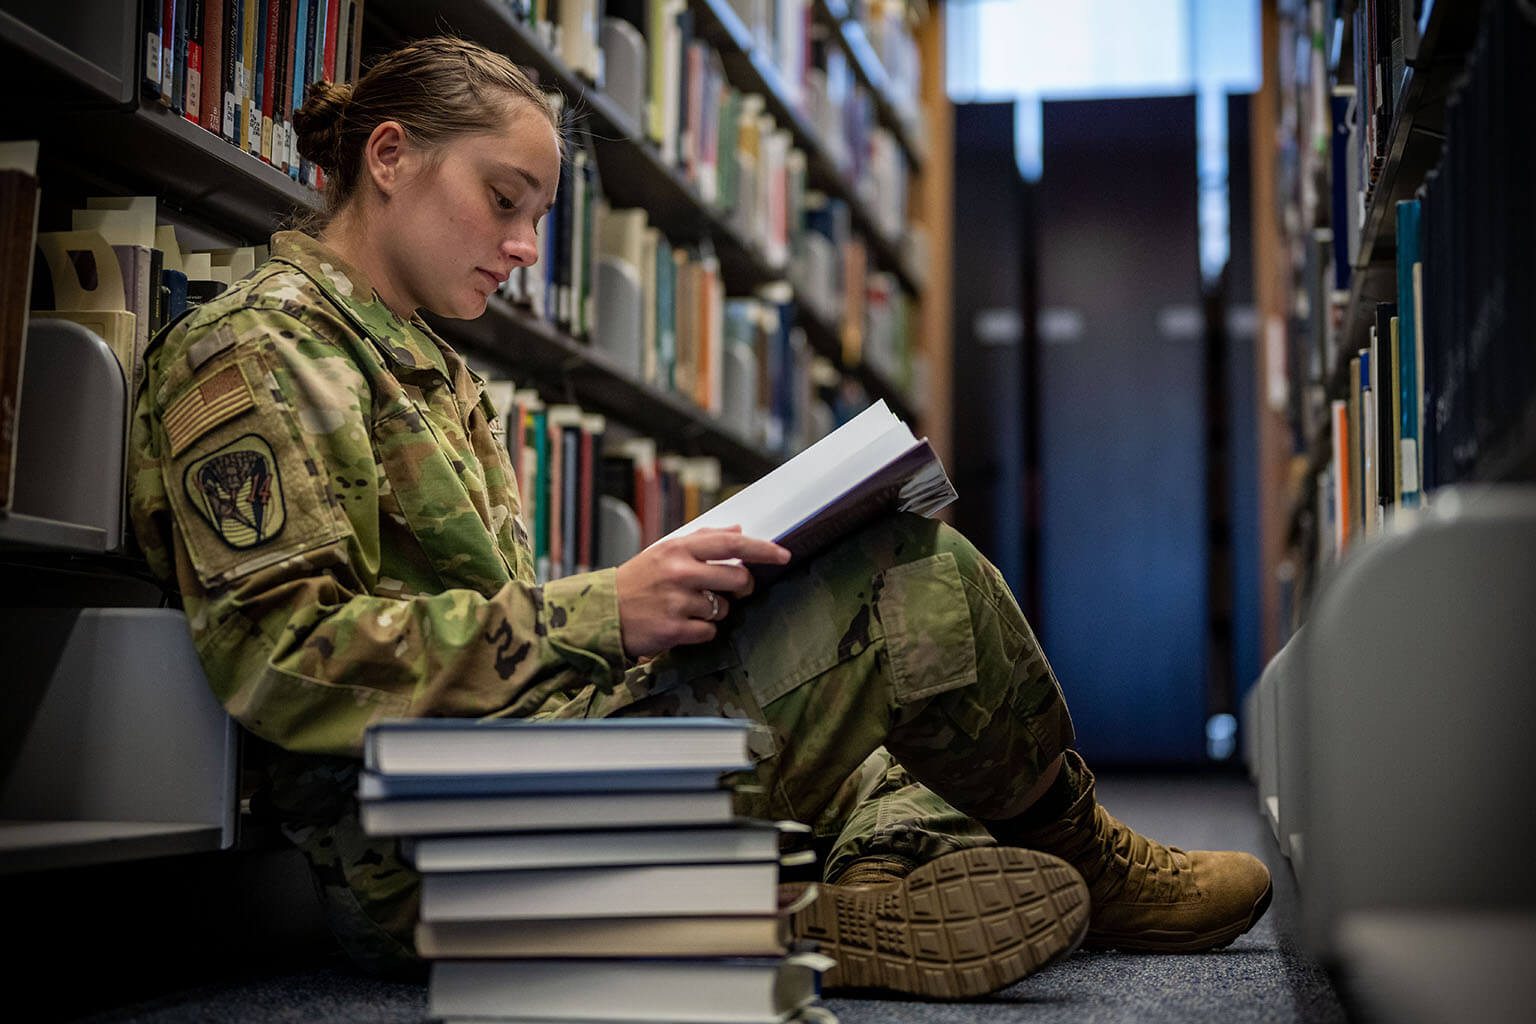 Female cadet reading books in library